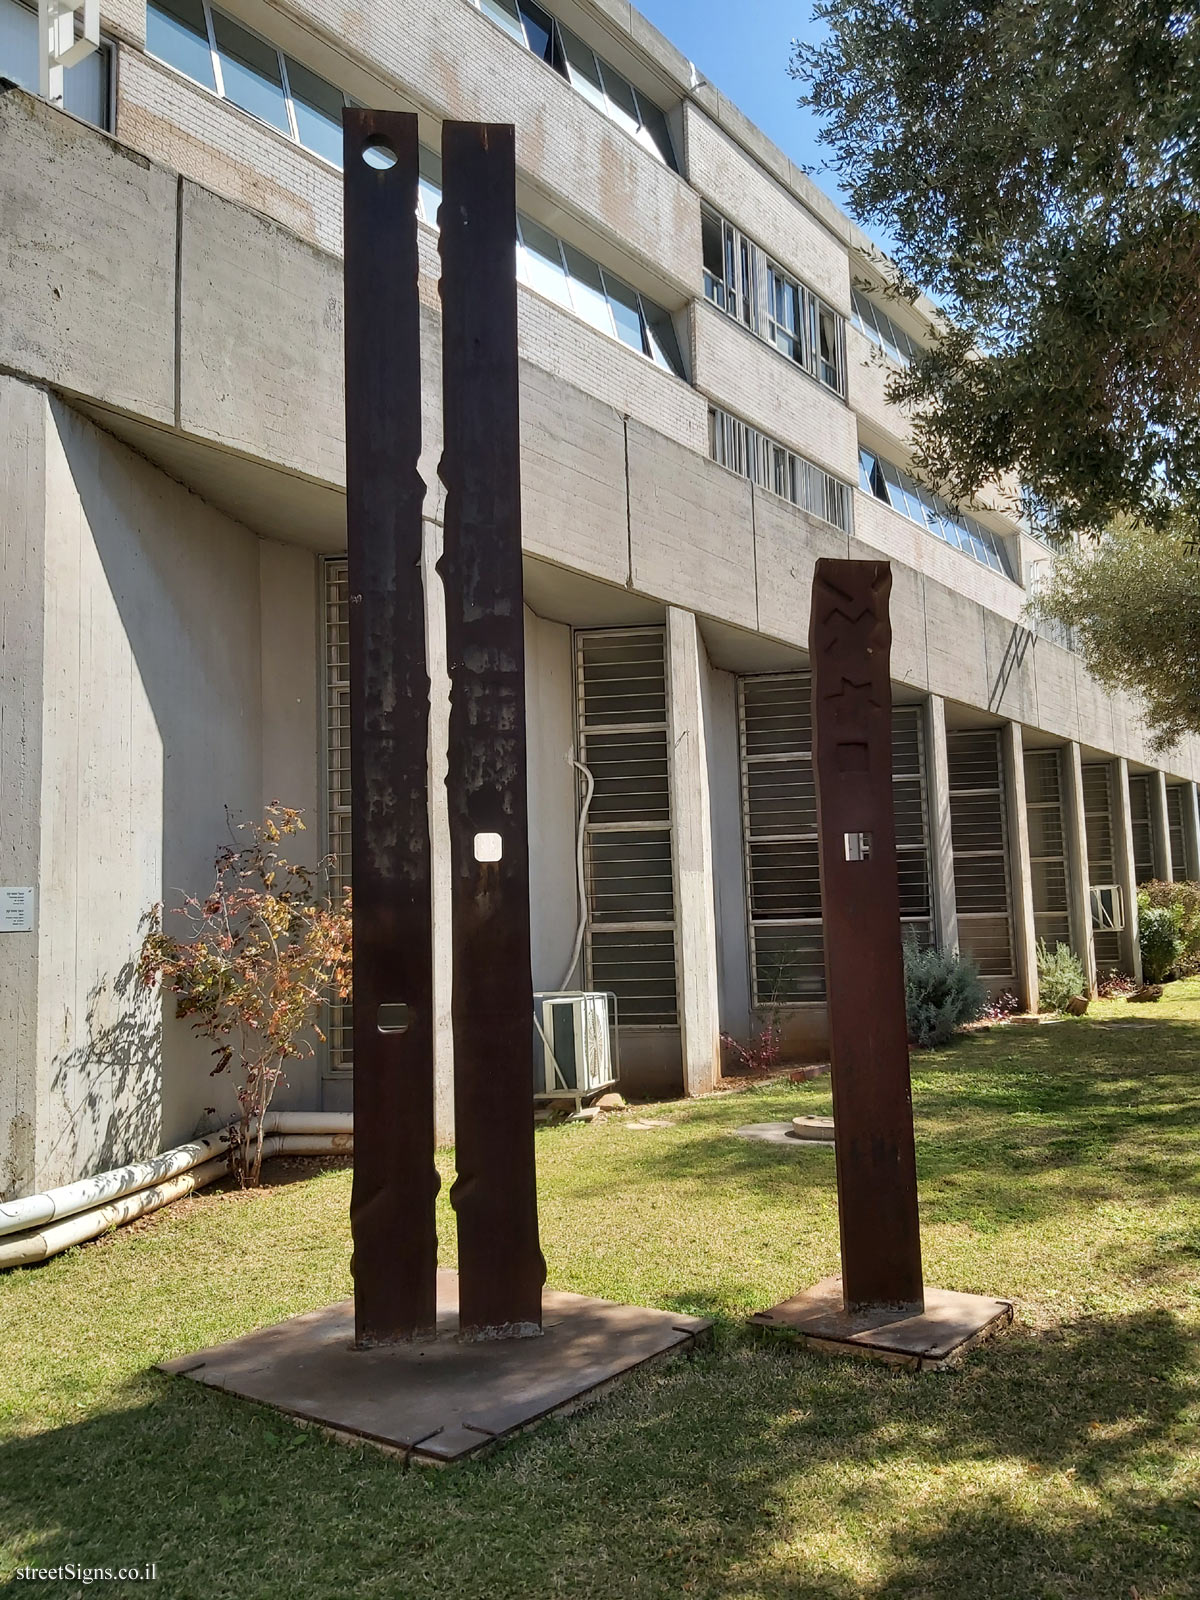 Tel Aviv - "Family judgment" - Outdoor sculpture by Yigael Tumarkin - Weizmann St 1, Tel Aviv-Yafo, Israel